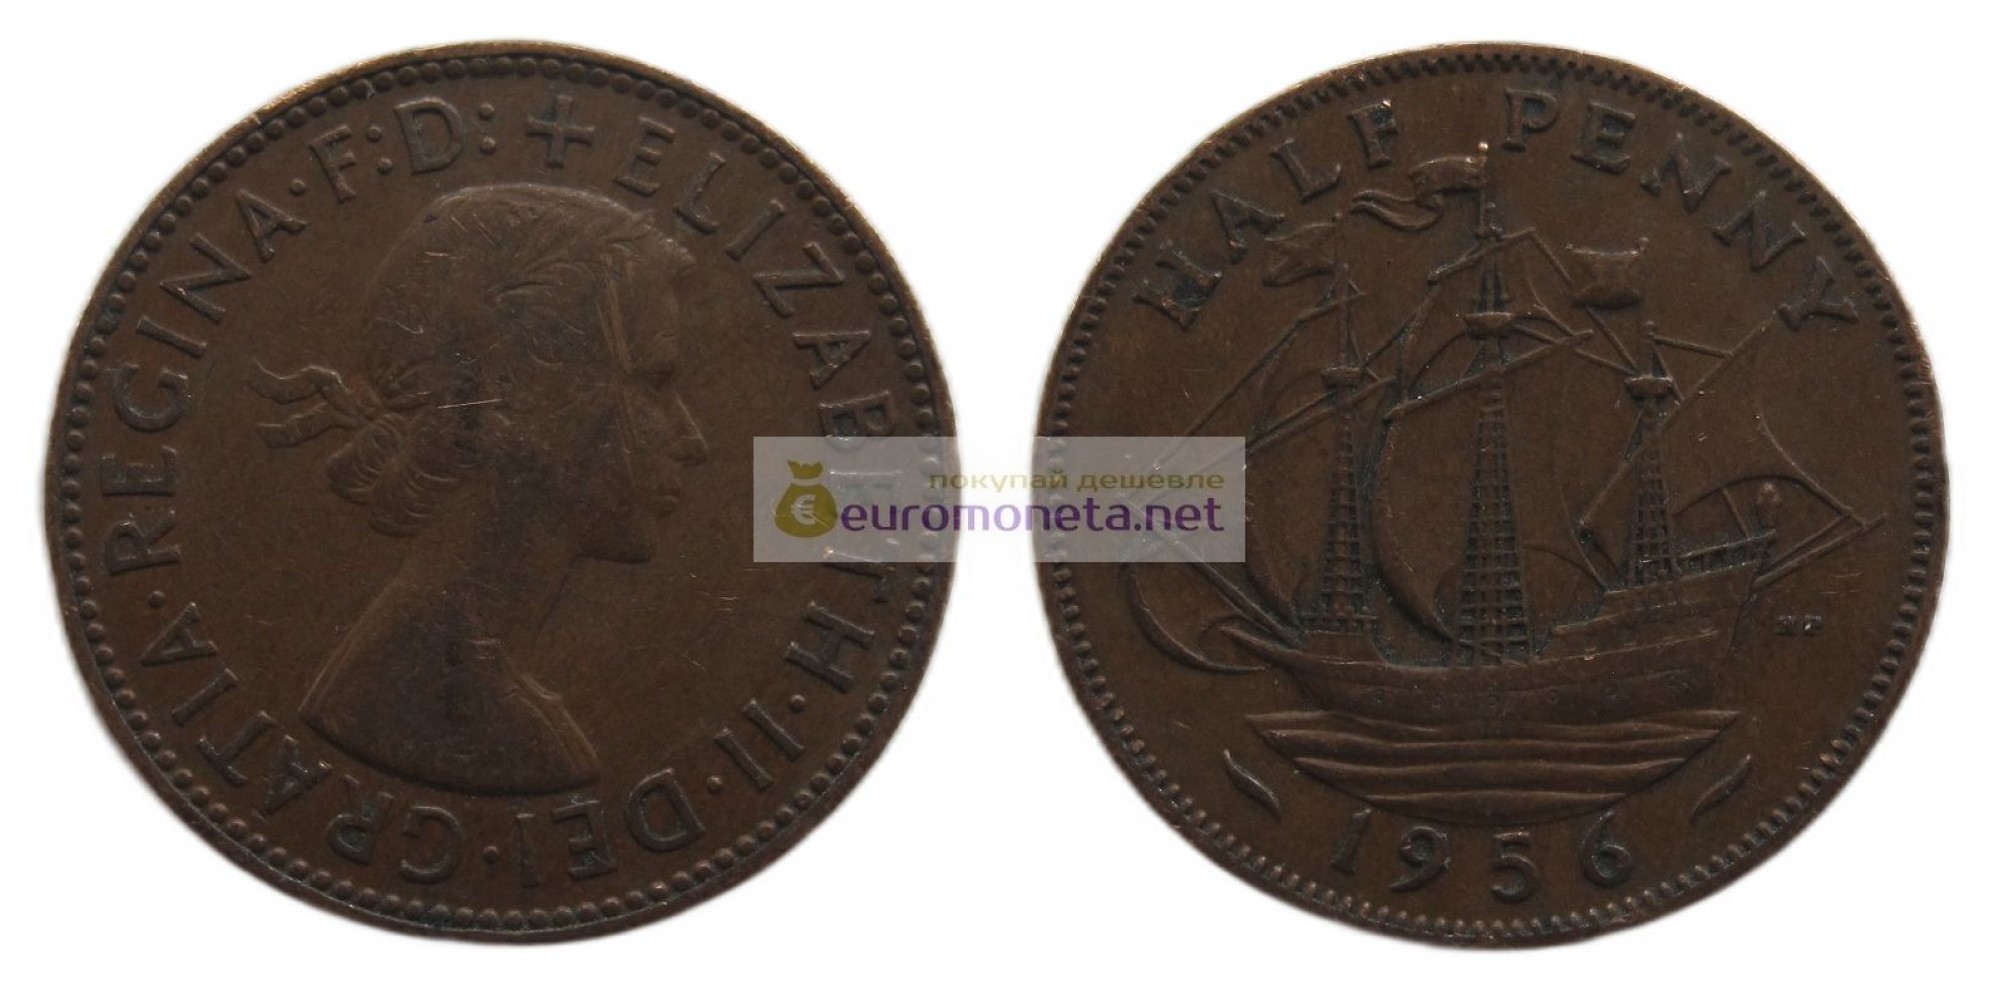 Великобритания 1/2 пенни (полпенни) 1956 год. Королева Елизавета II